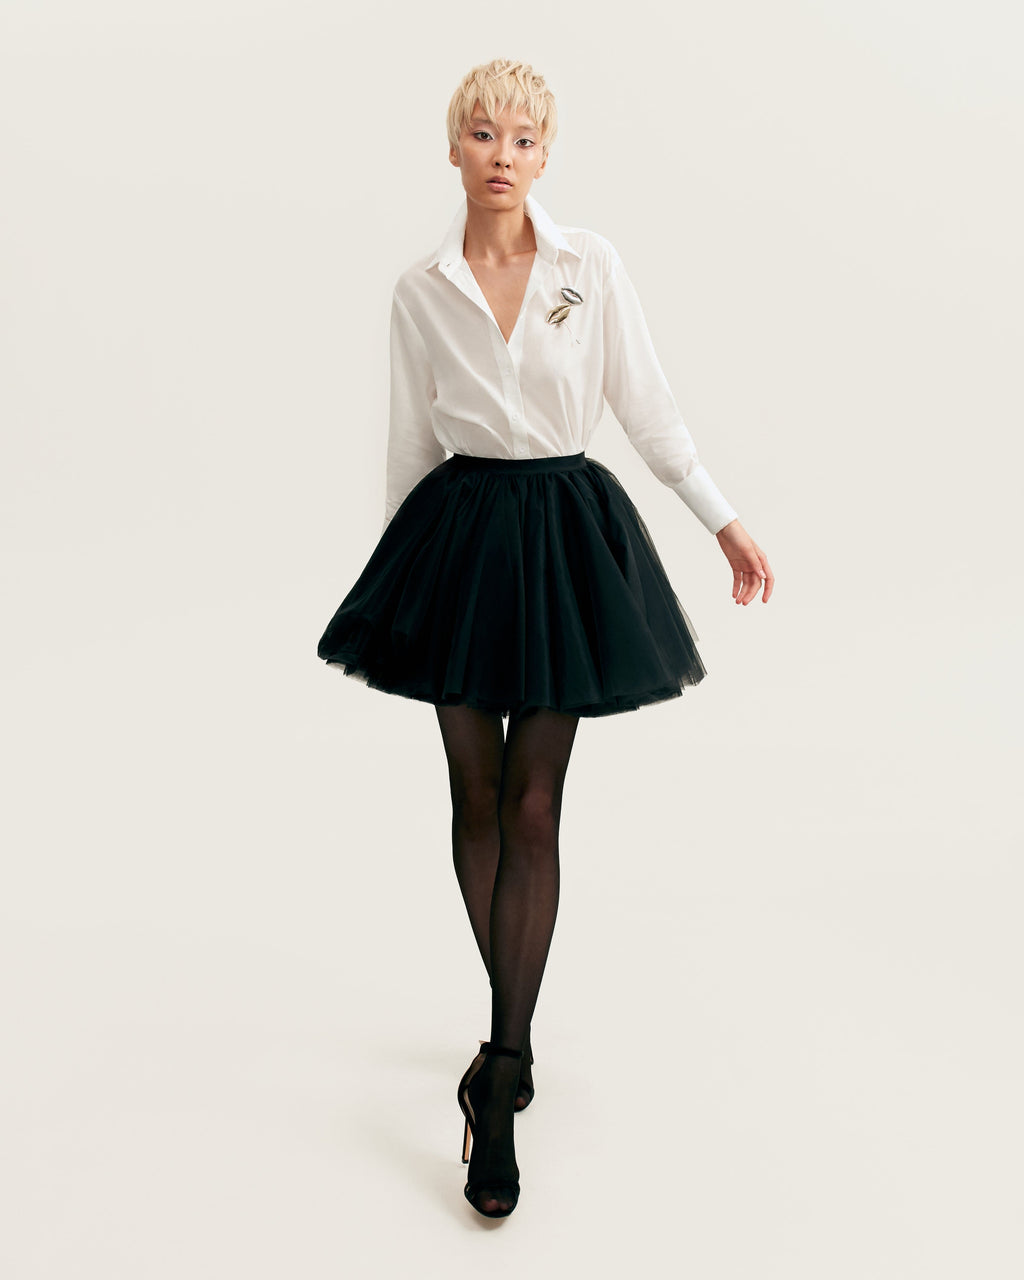 Millie Monogram Bodysuit - Black  Black bodysuit, Bodysuit, White blazer